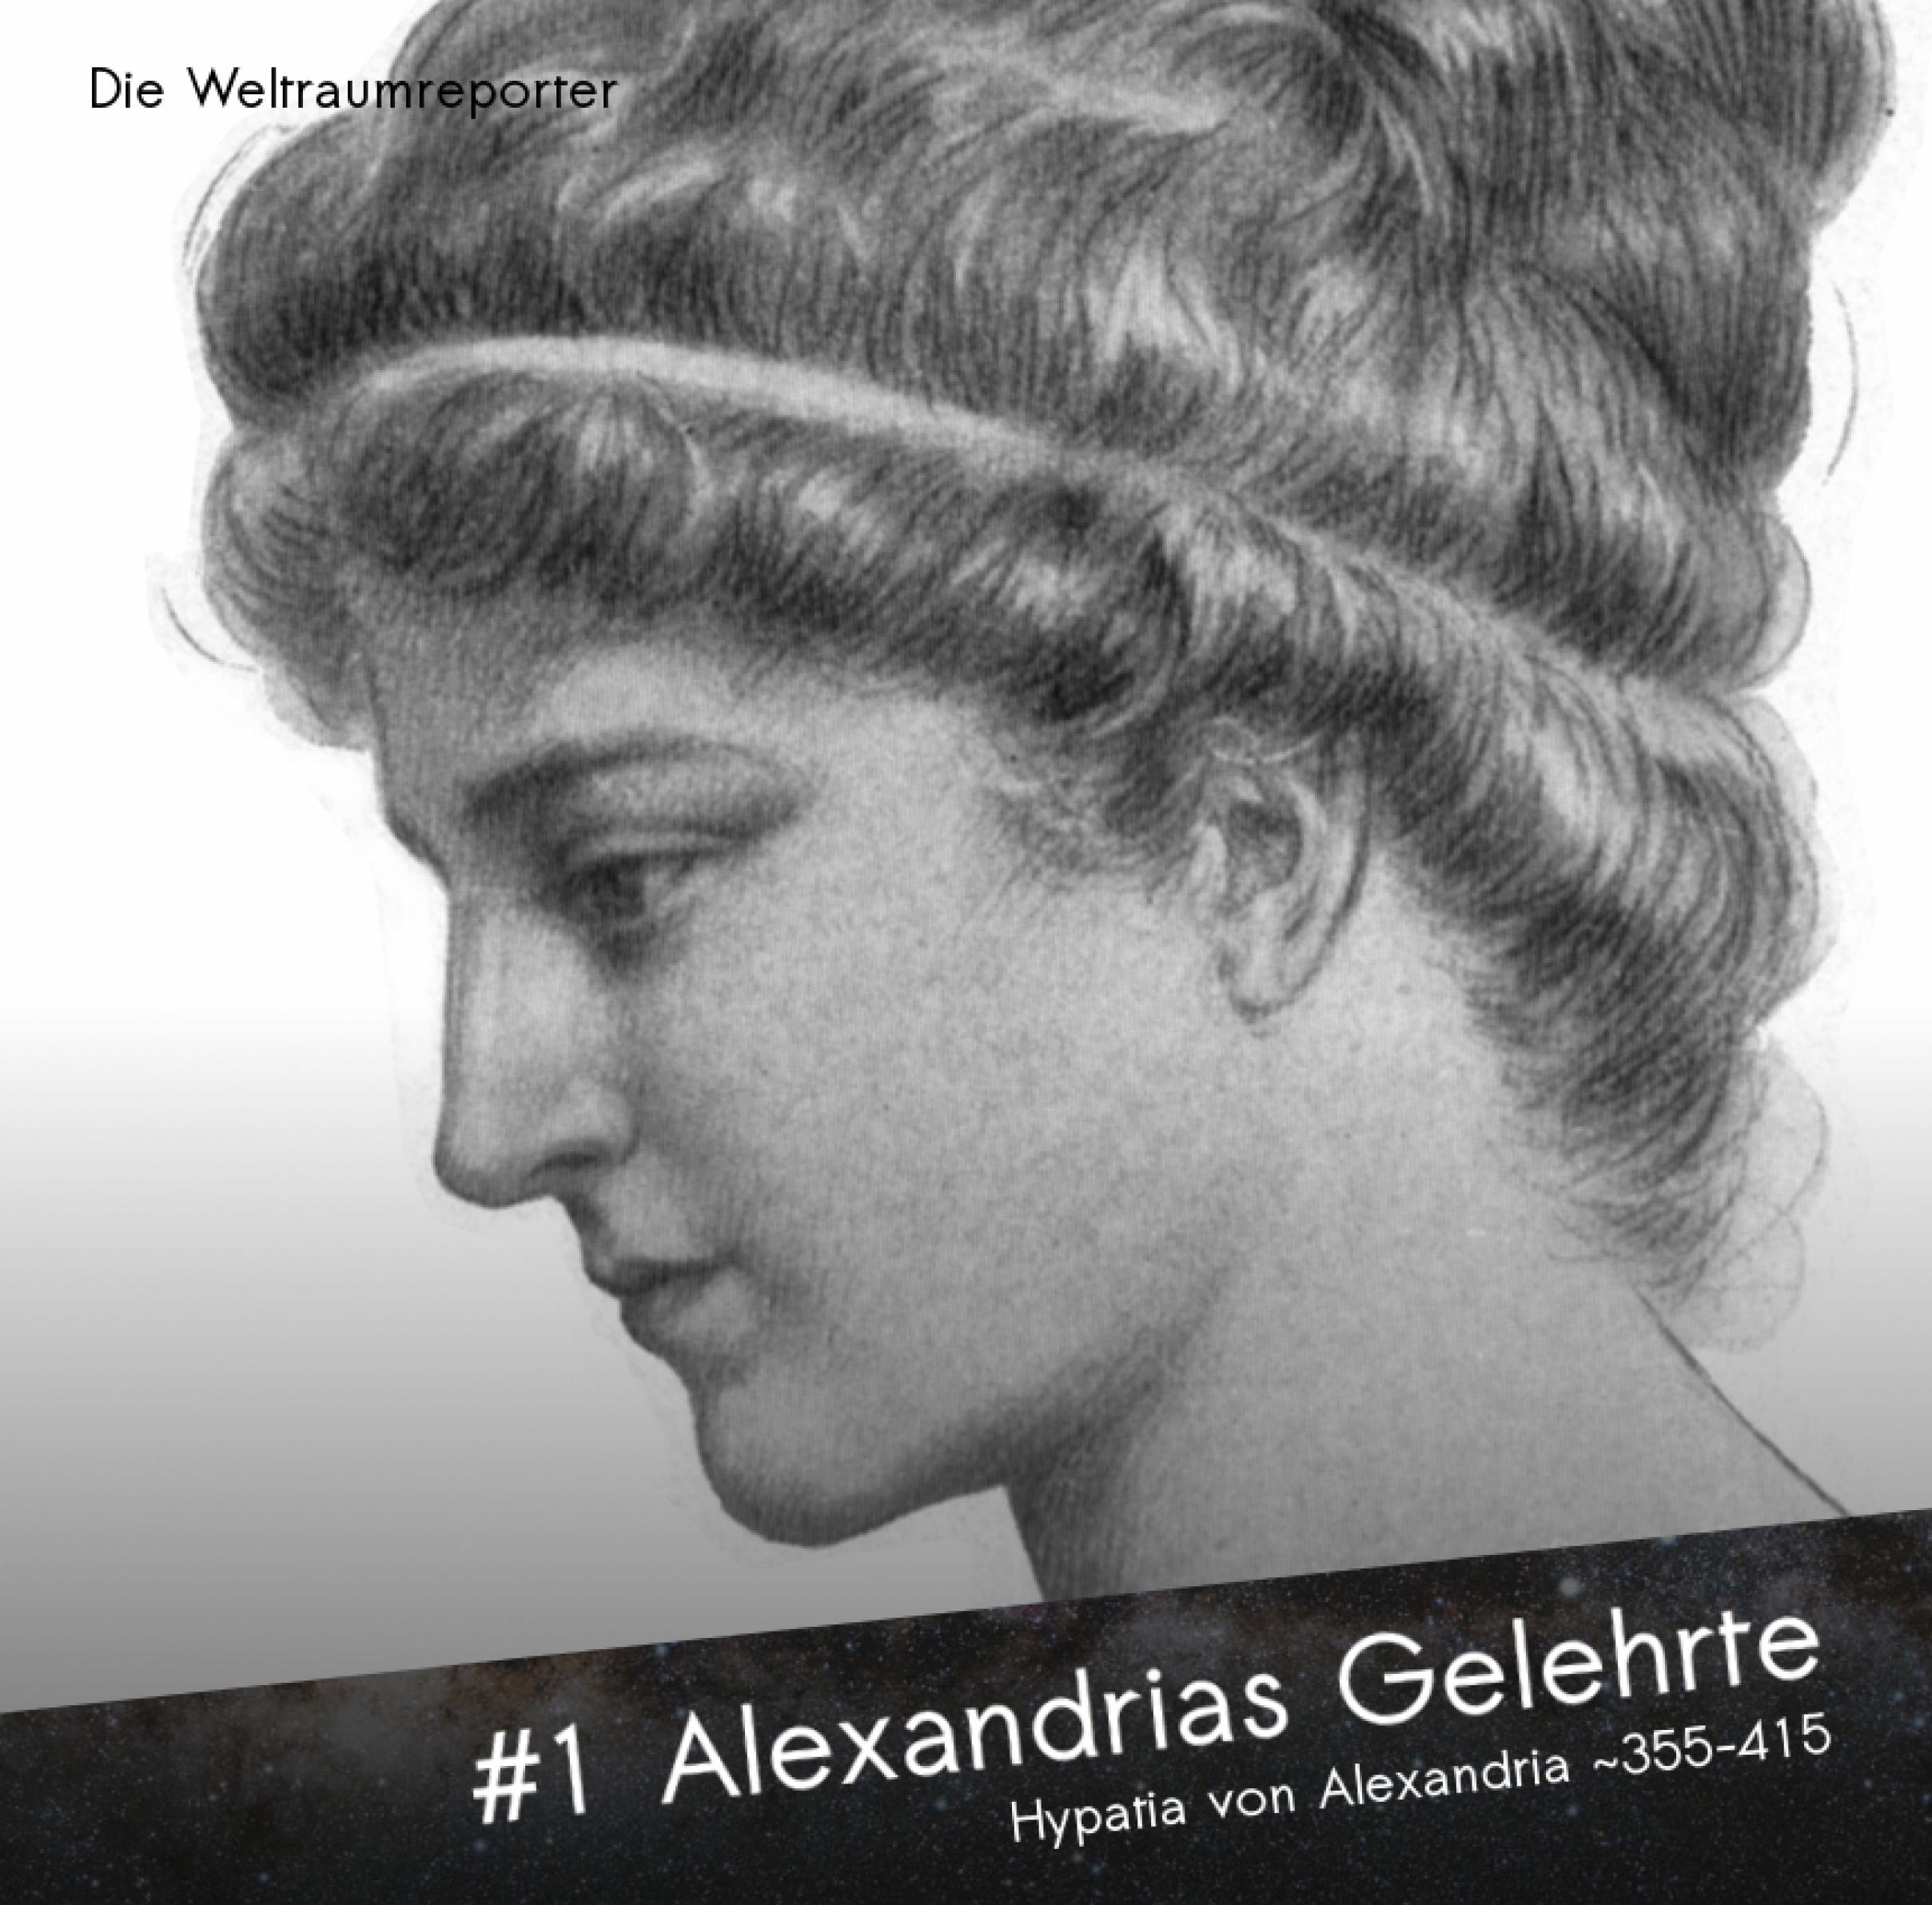 Hypatia von Alexandria: Alexandrias Gelehrte